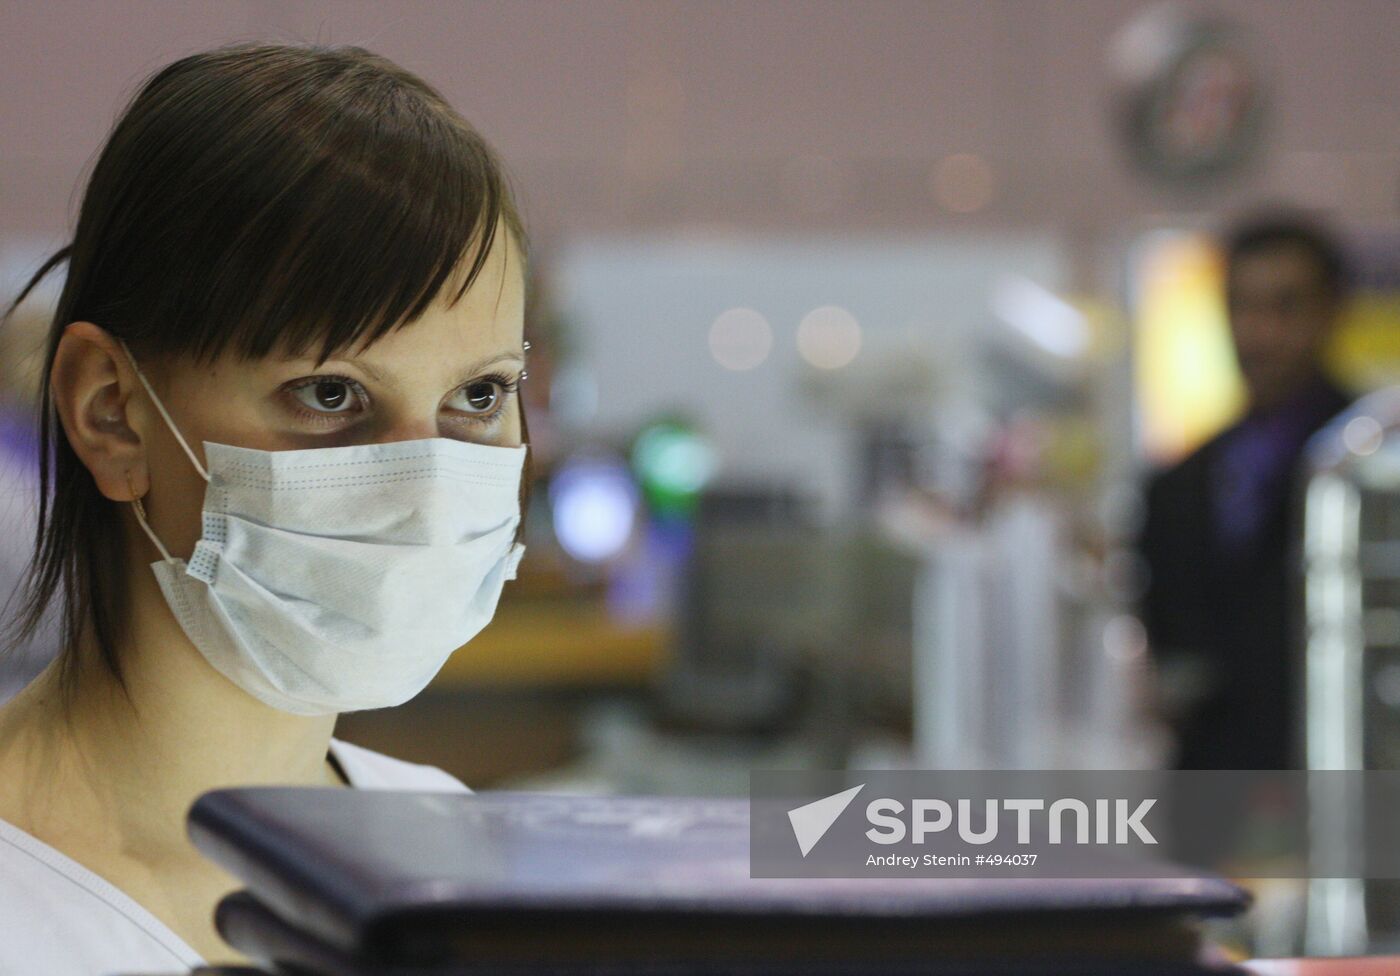 Preventive measures against swine-flu outbreak